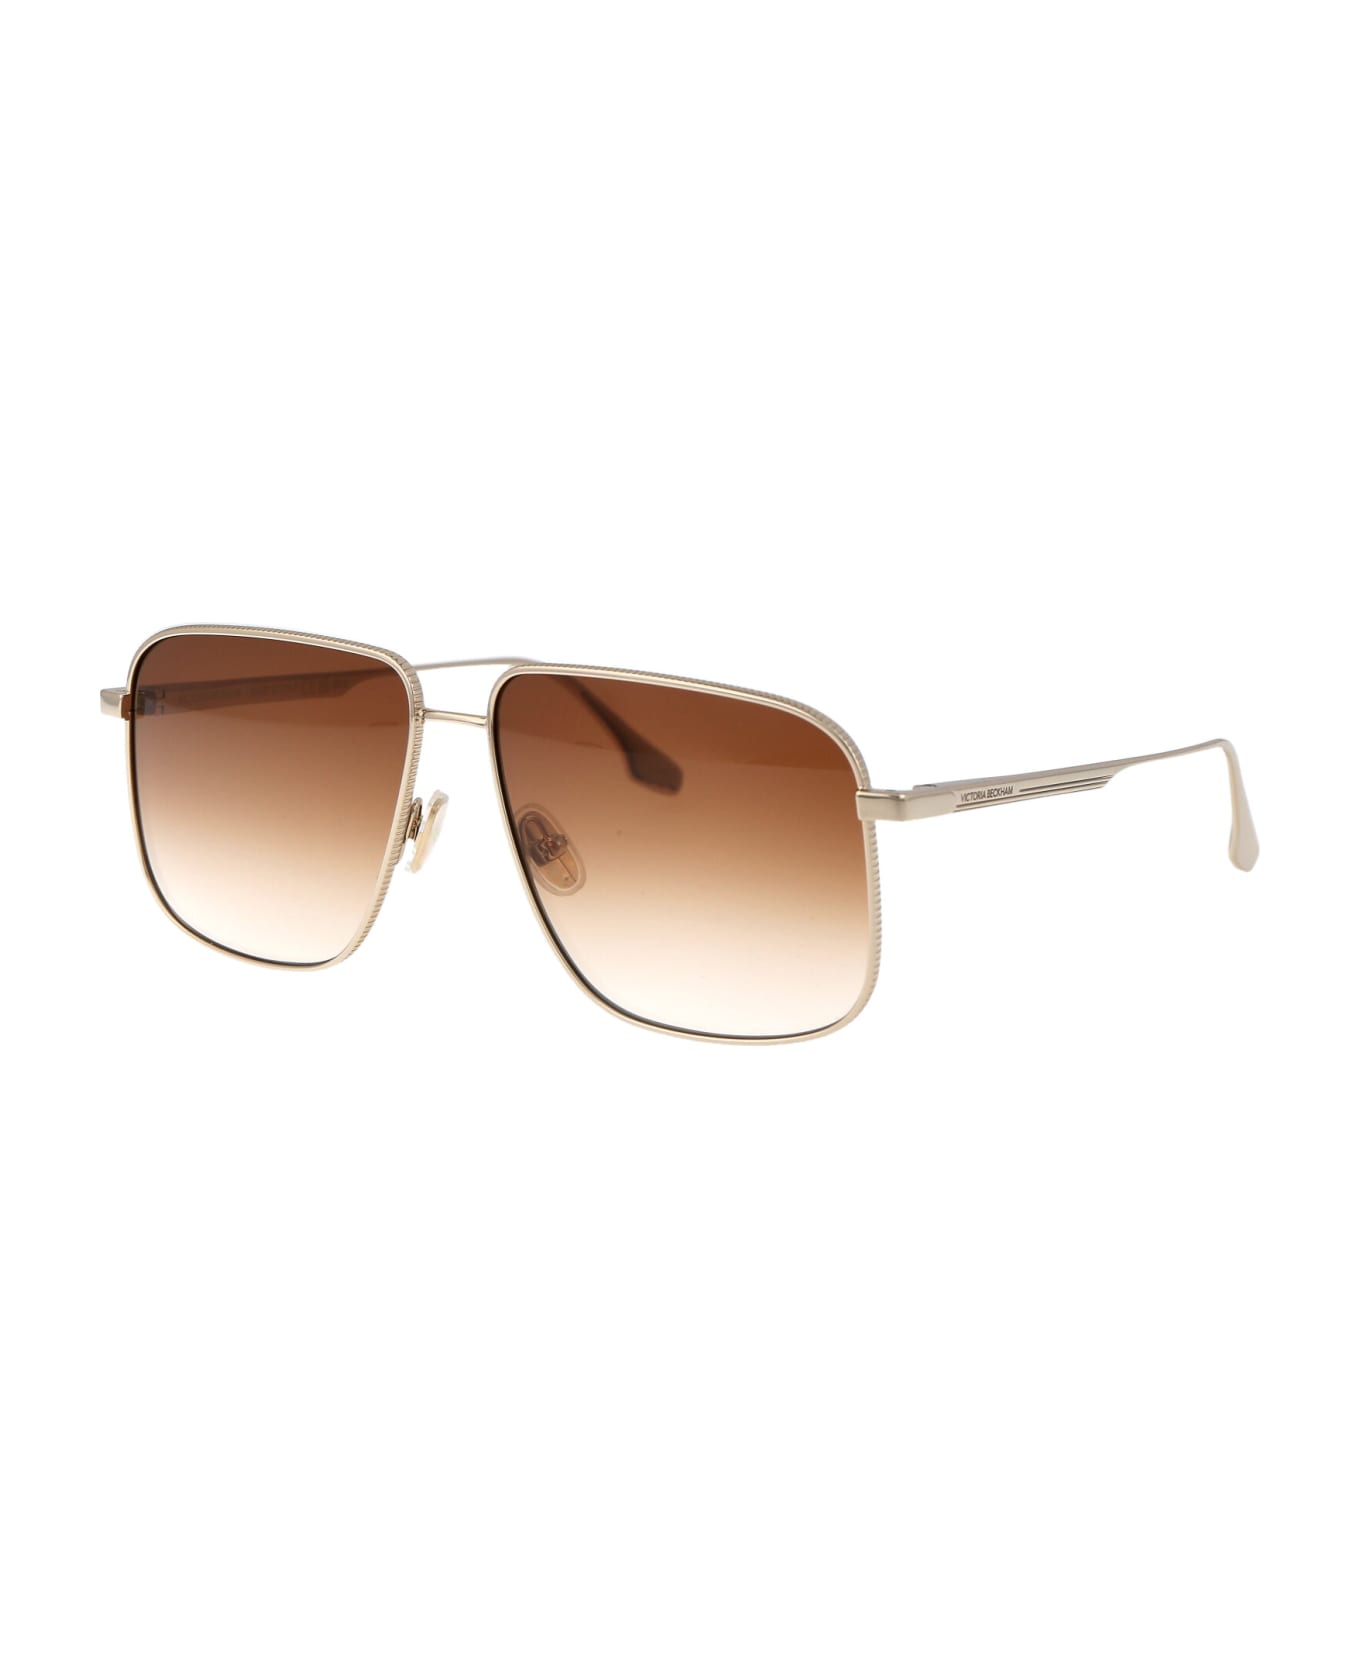 Victoria Beckham Vb243s Sunglasses - 723 GOLD/HONEY GRADIENT